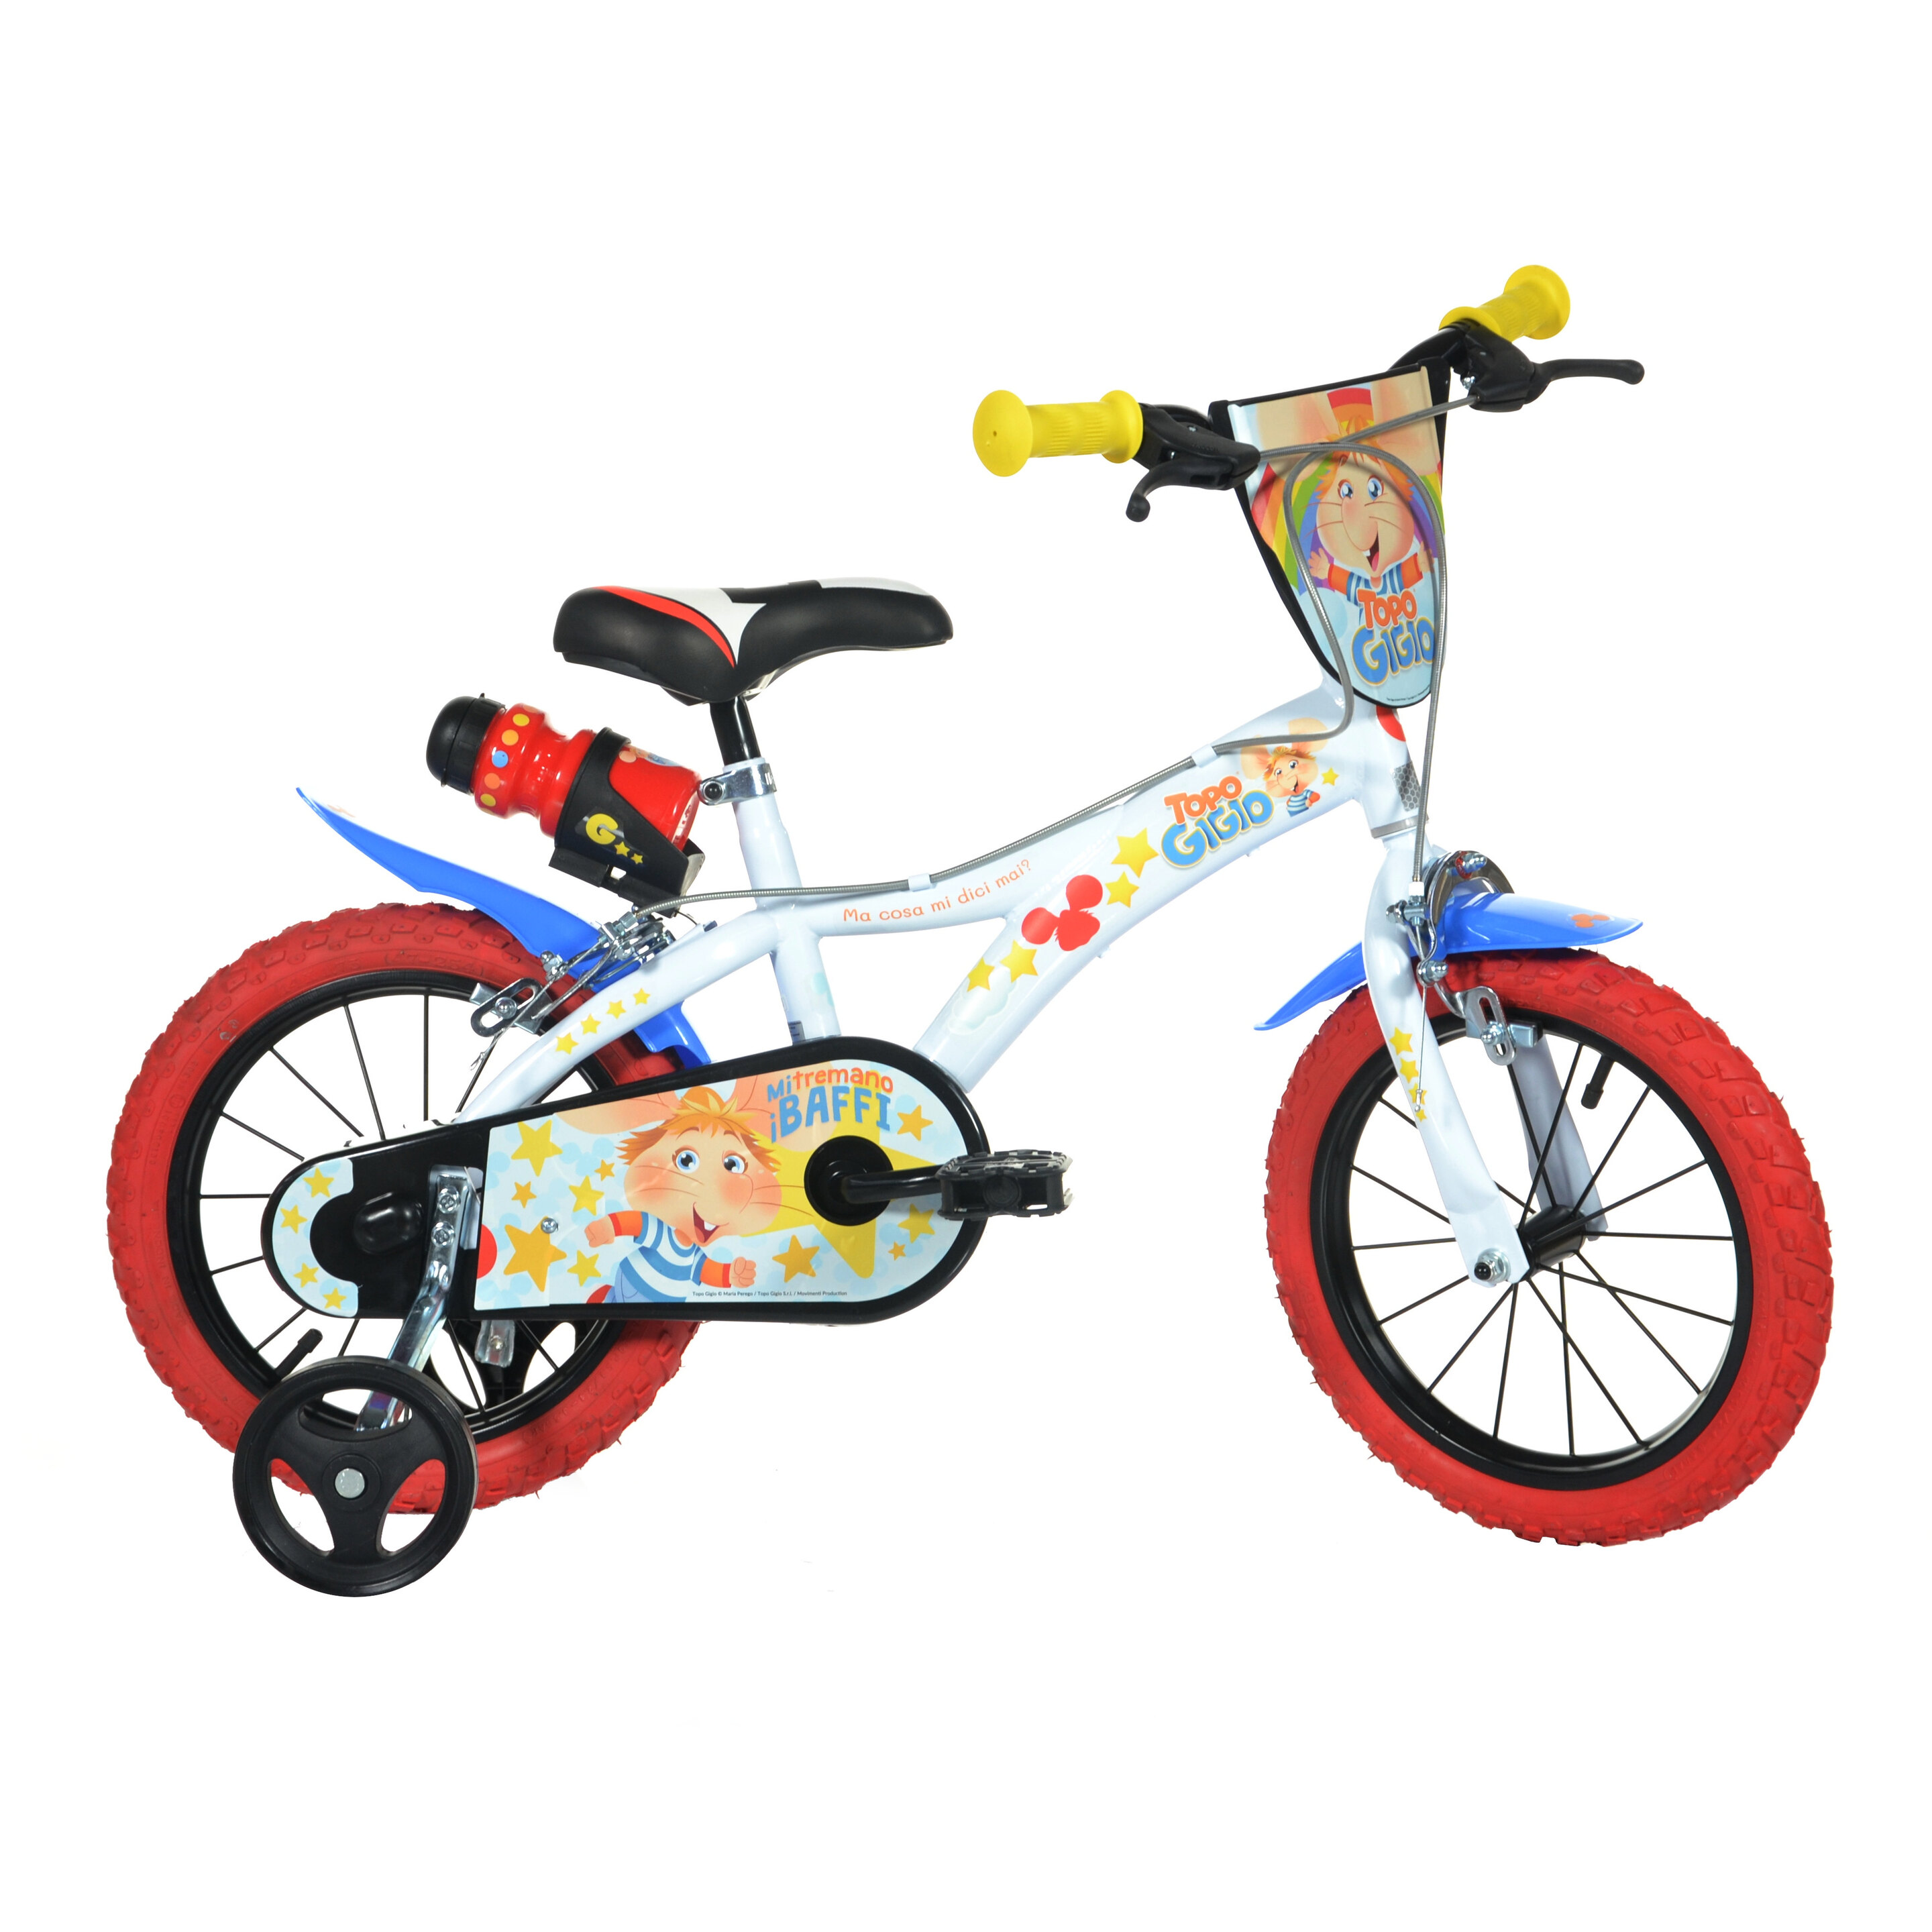 Bicicleta Infantil Topo Gigio 16 Pulgadas